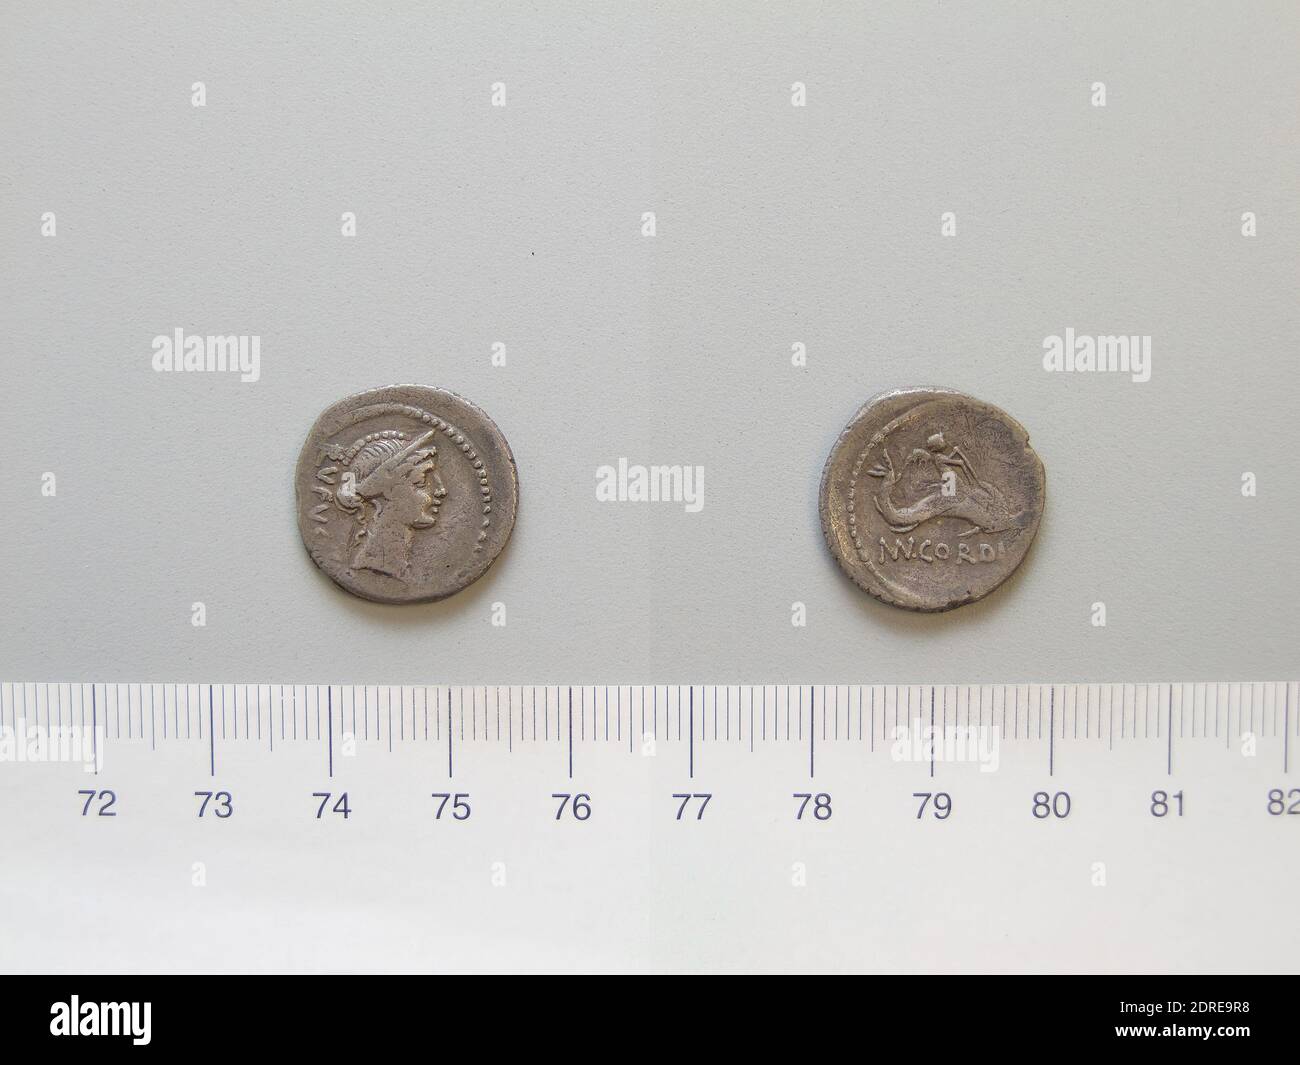 Mint: Rome, Magistrate: M’. Cordius Rufus, Denarius from Rome, 46 B.C., Silver, 3.73 g, 3:00, 19 mm, Made in Rome, Roman, 1st century B.C., Numismatics Stock Photo